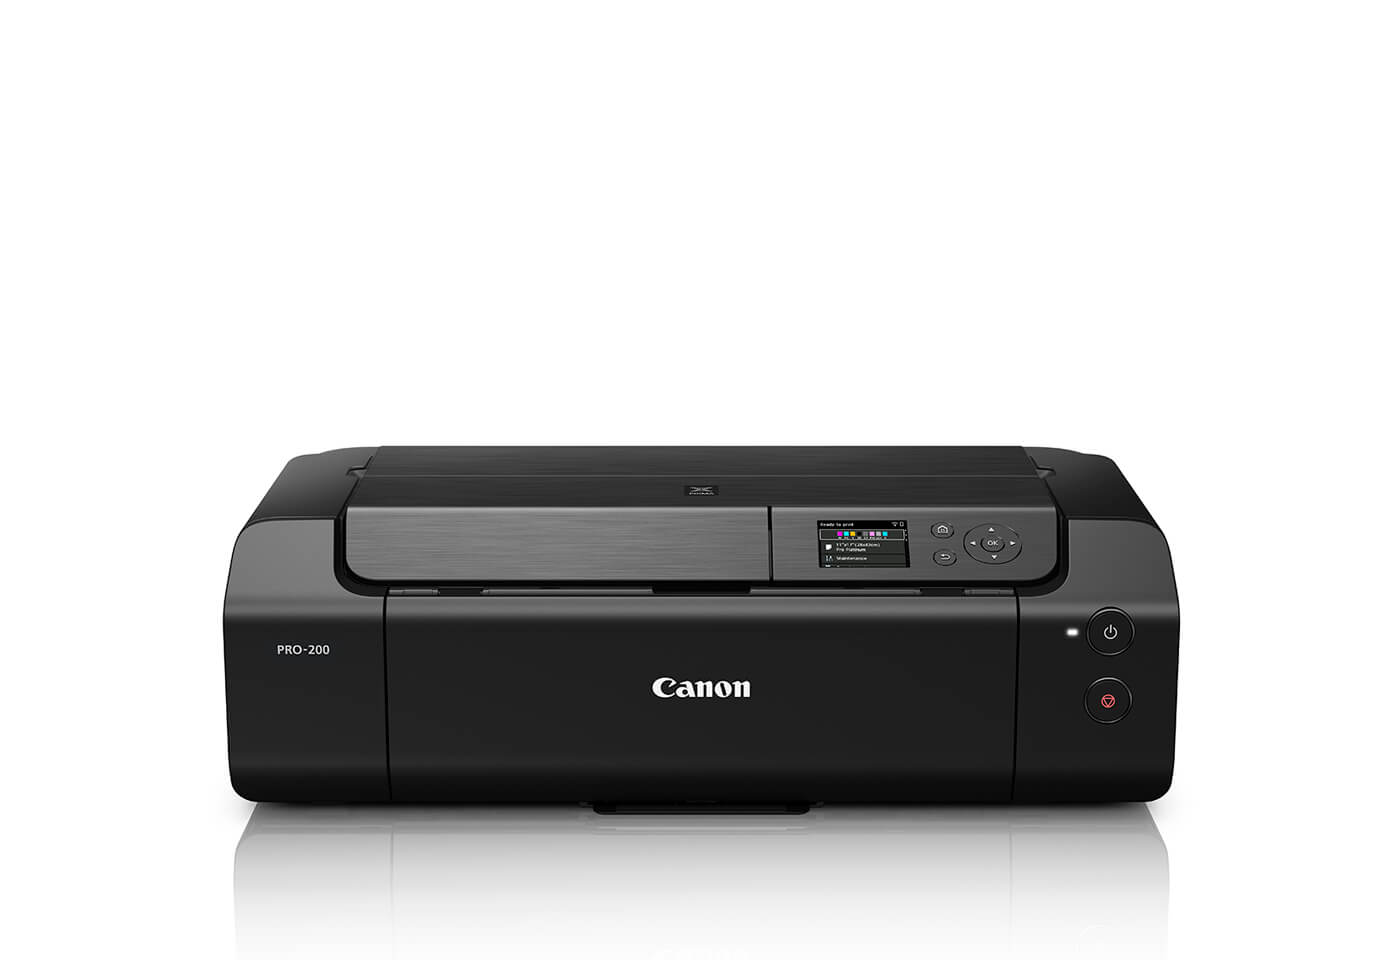 Product image of PIXMA PRO-200 printer front profile